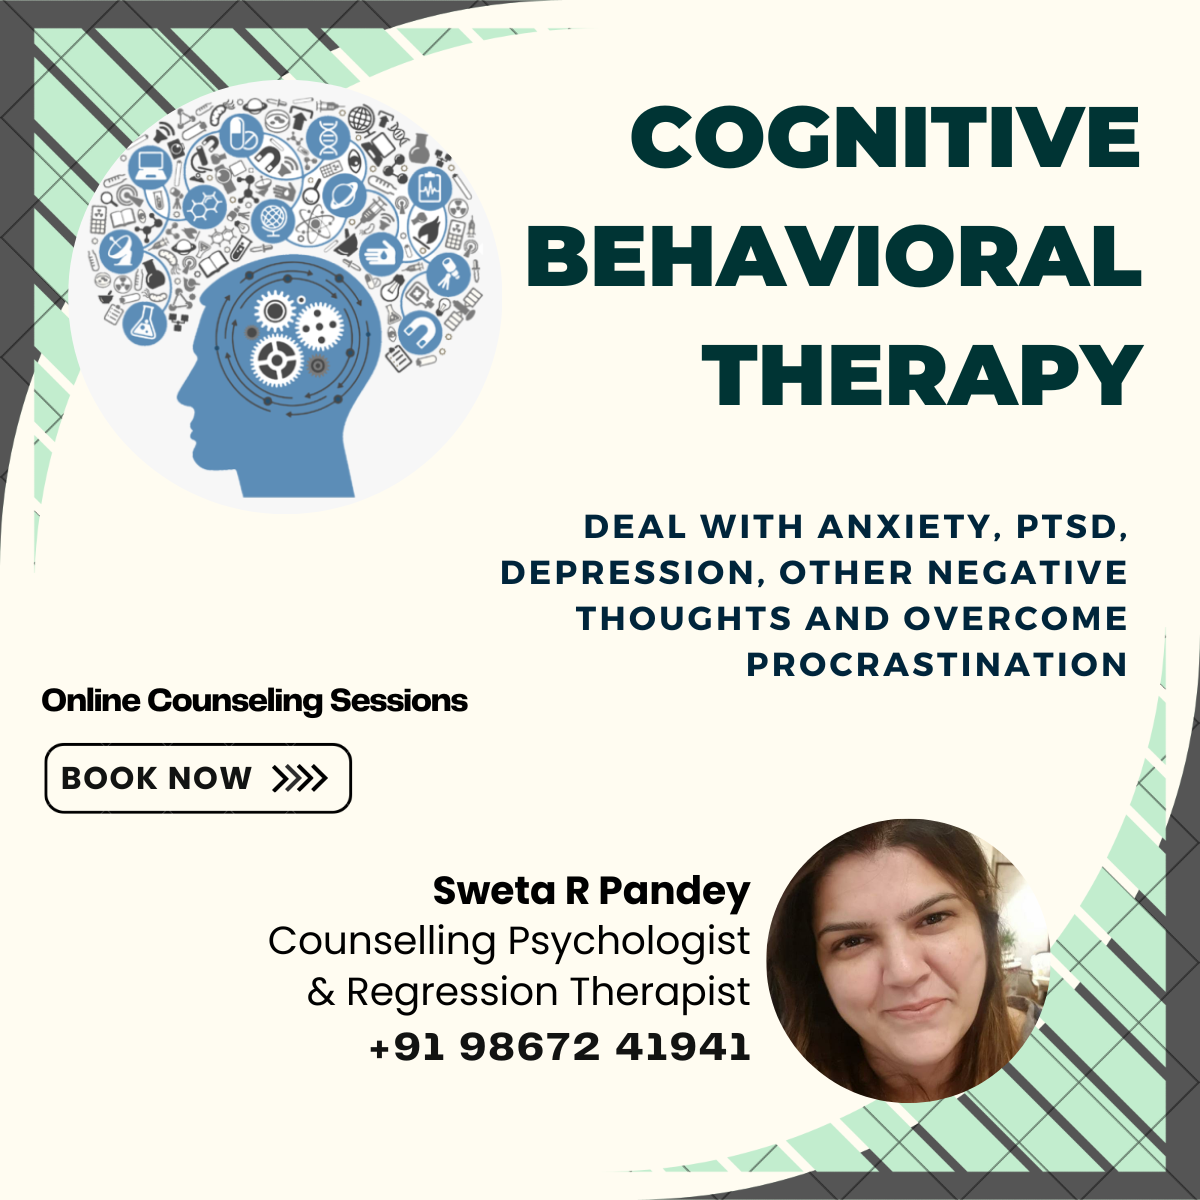 Sweta R Pandey - Cognitive Behavioral Therapy - Durgapur